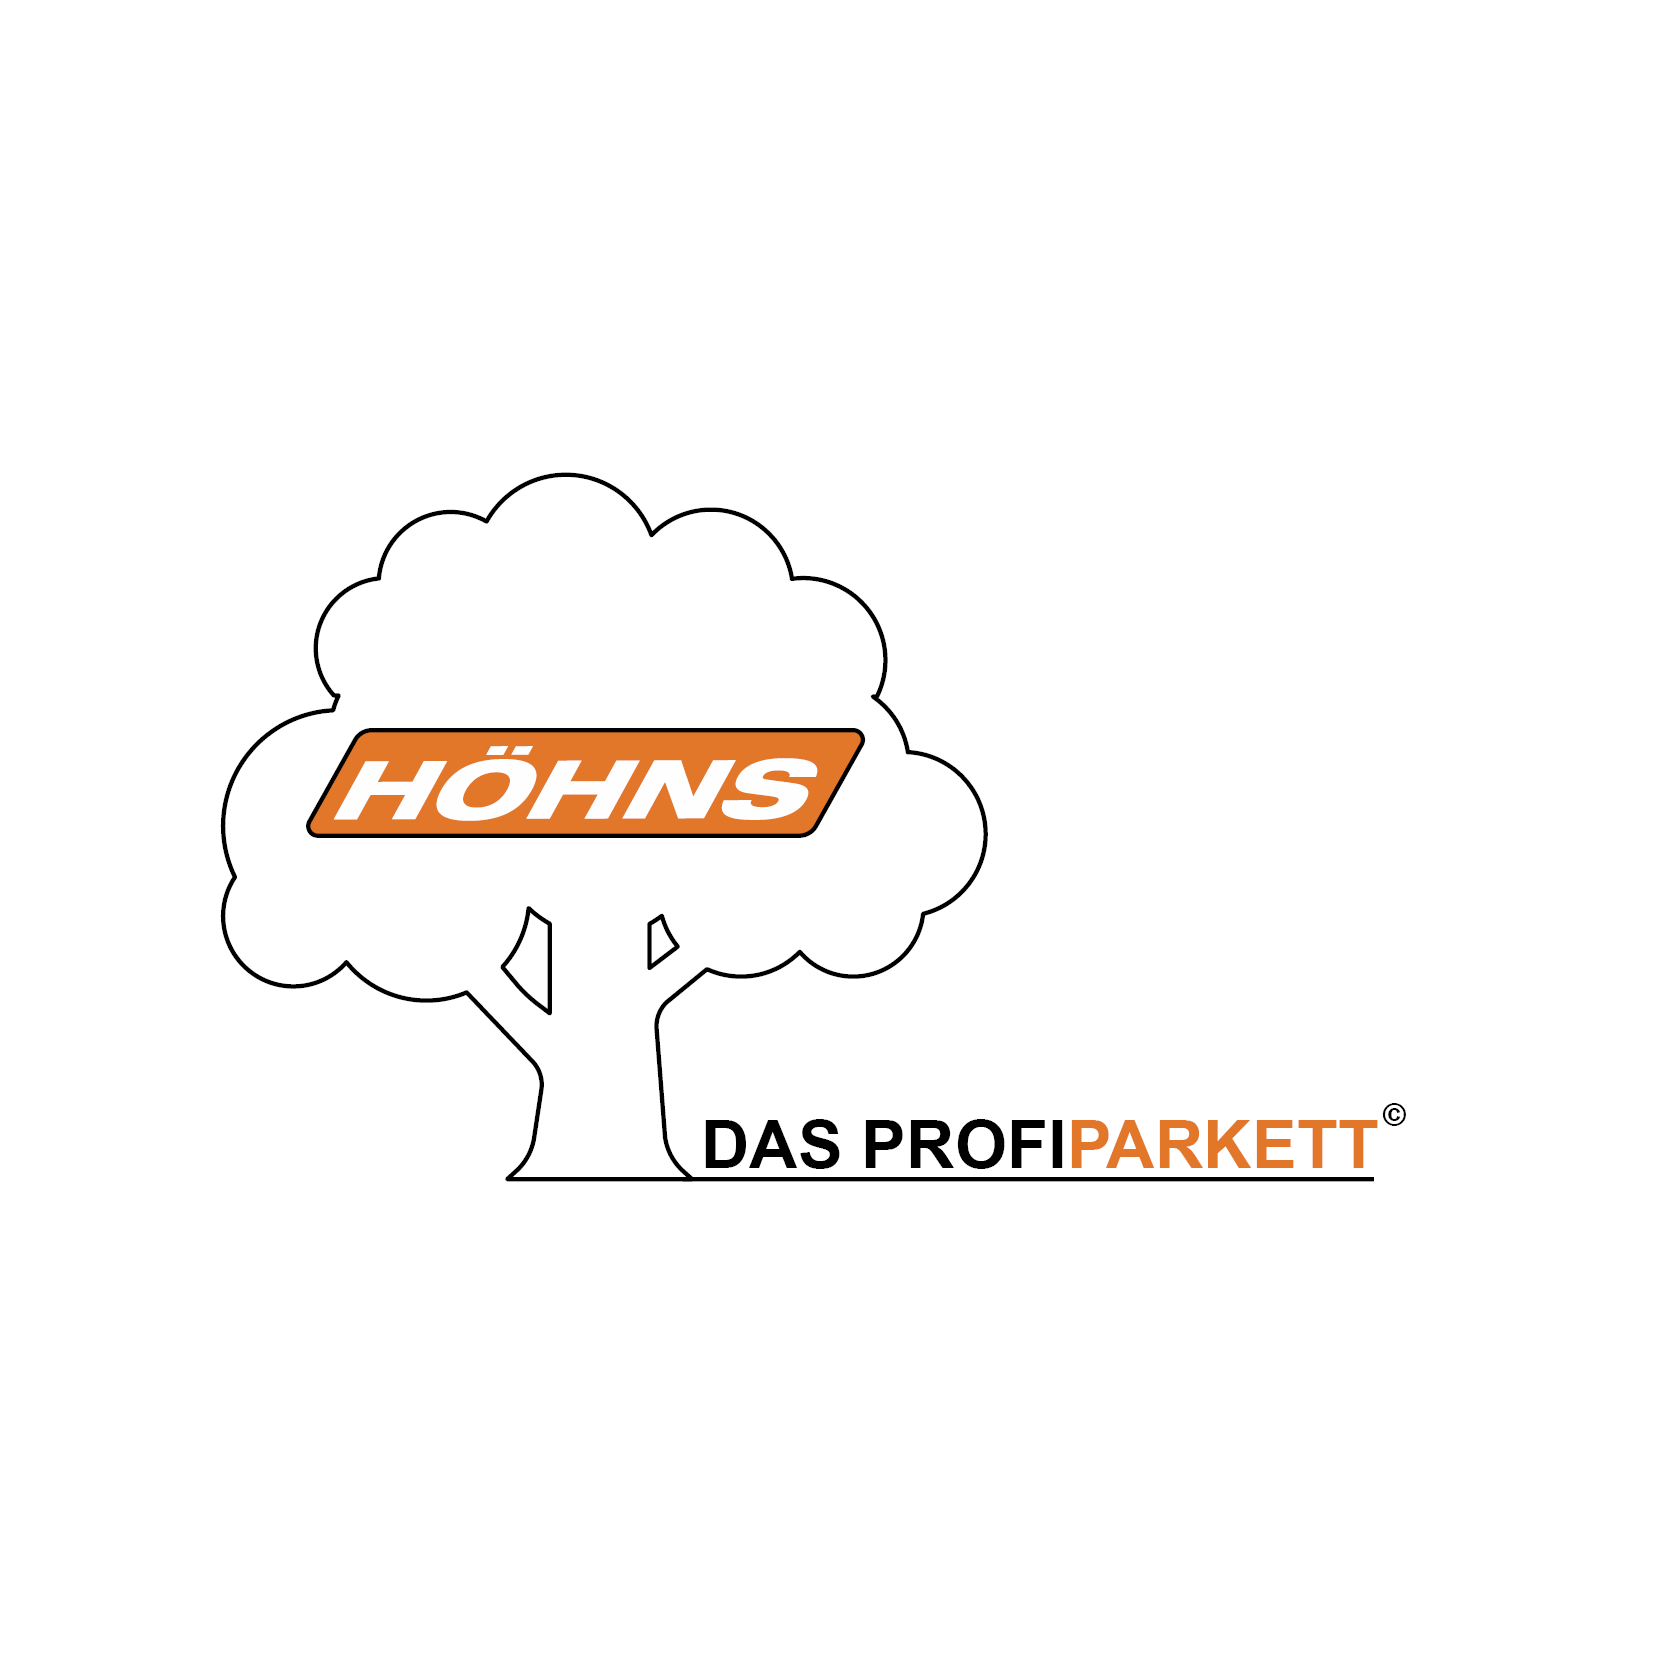 Höhns - Das Profiparkett